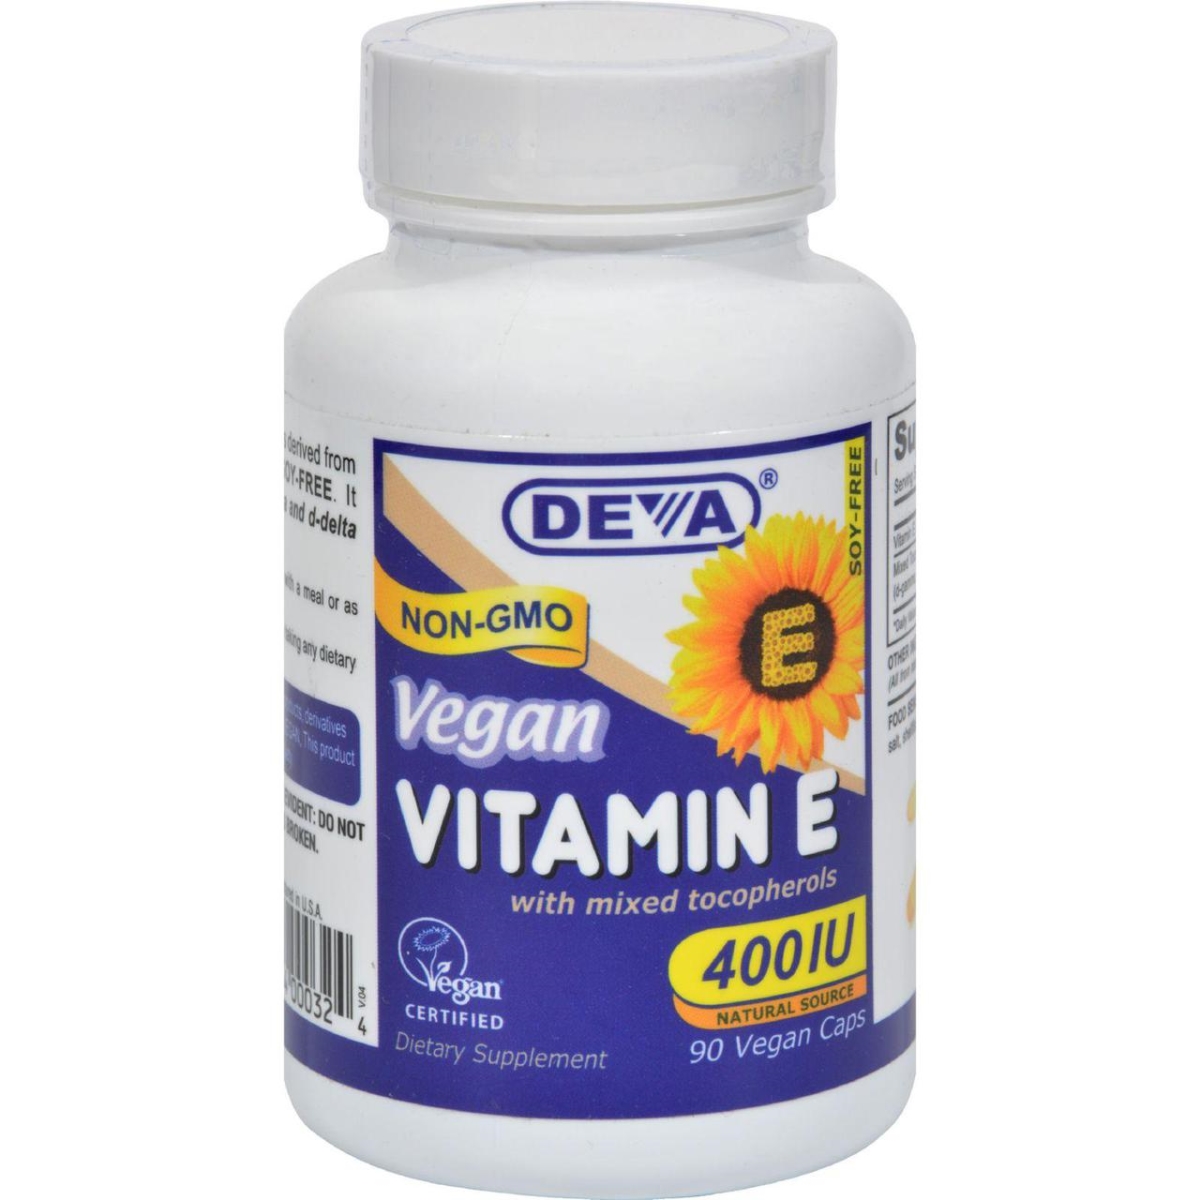 Hg0151605 Vitamin E With Mixed Tocopherols- 400 Iu, 90 Vegan Capsules